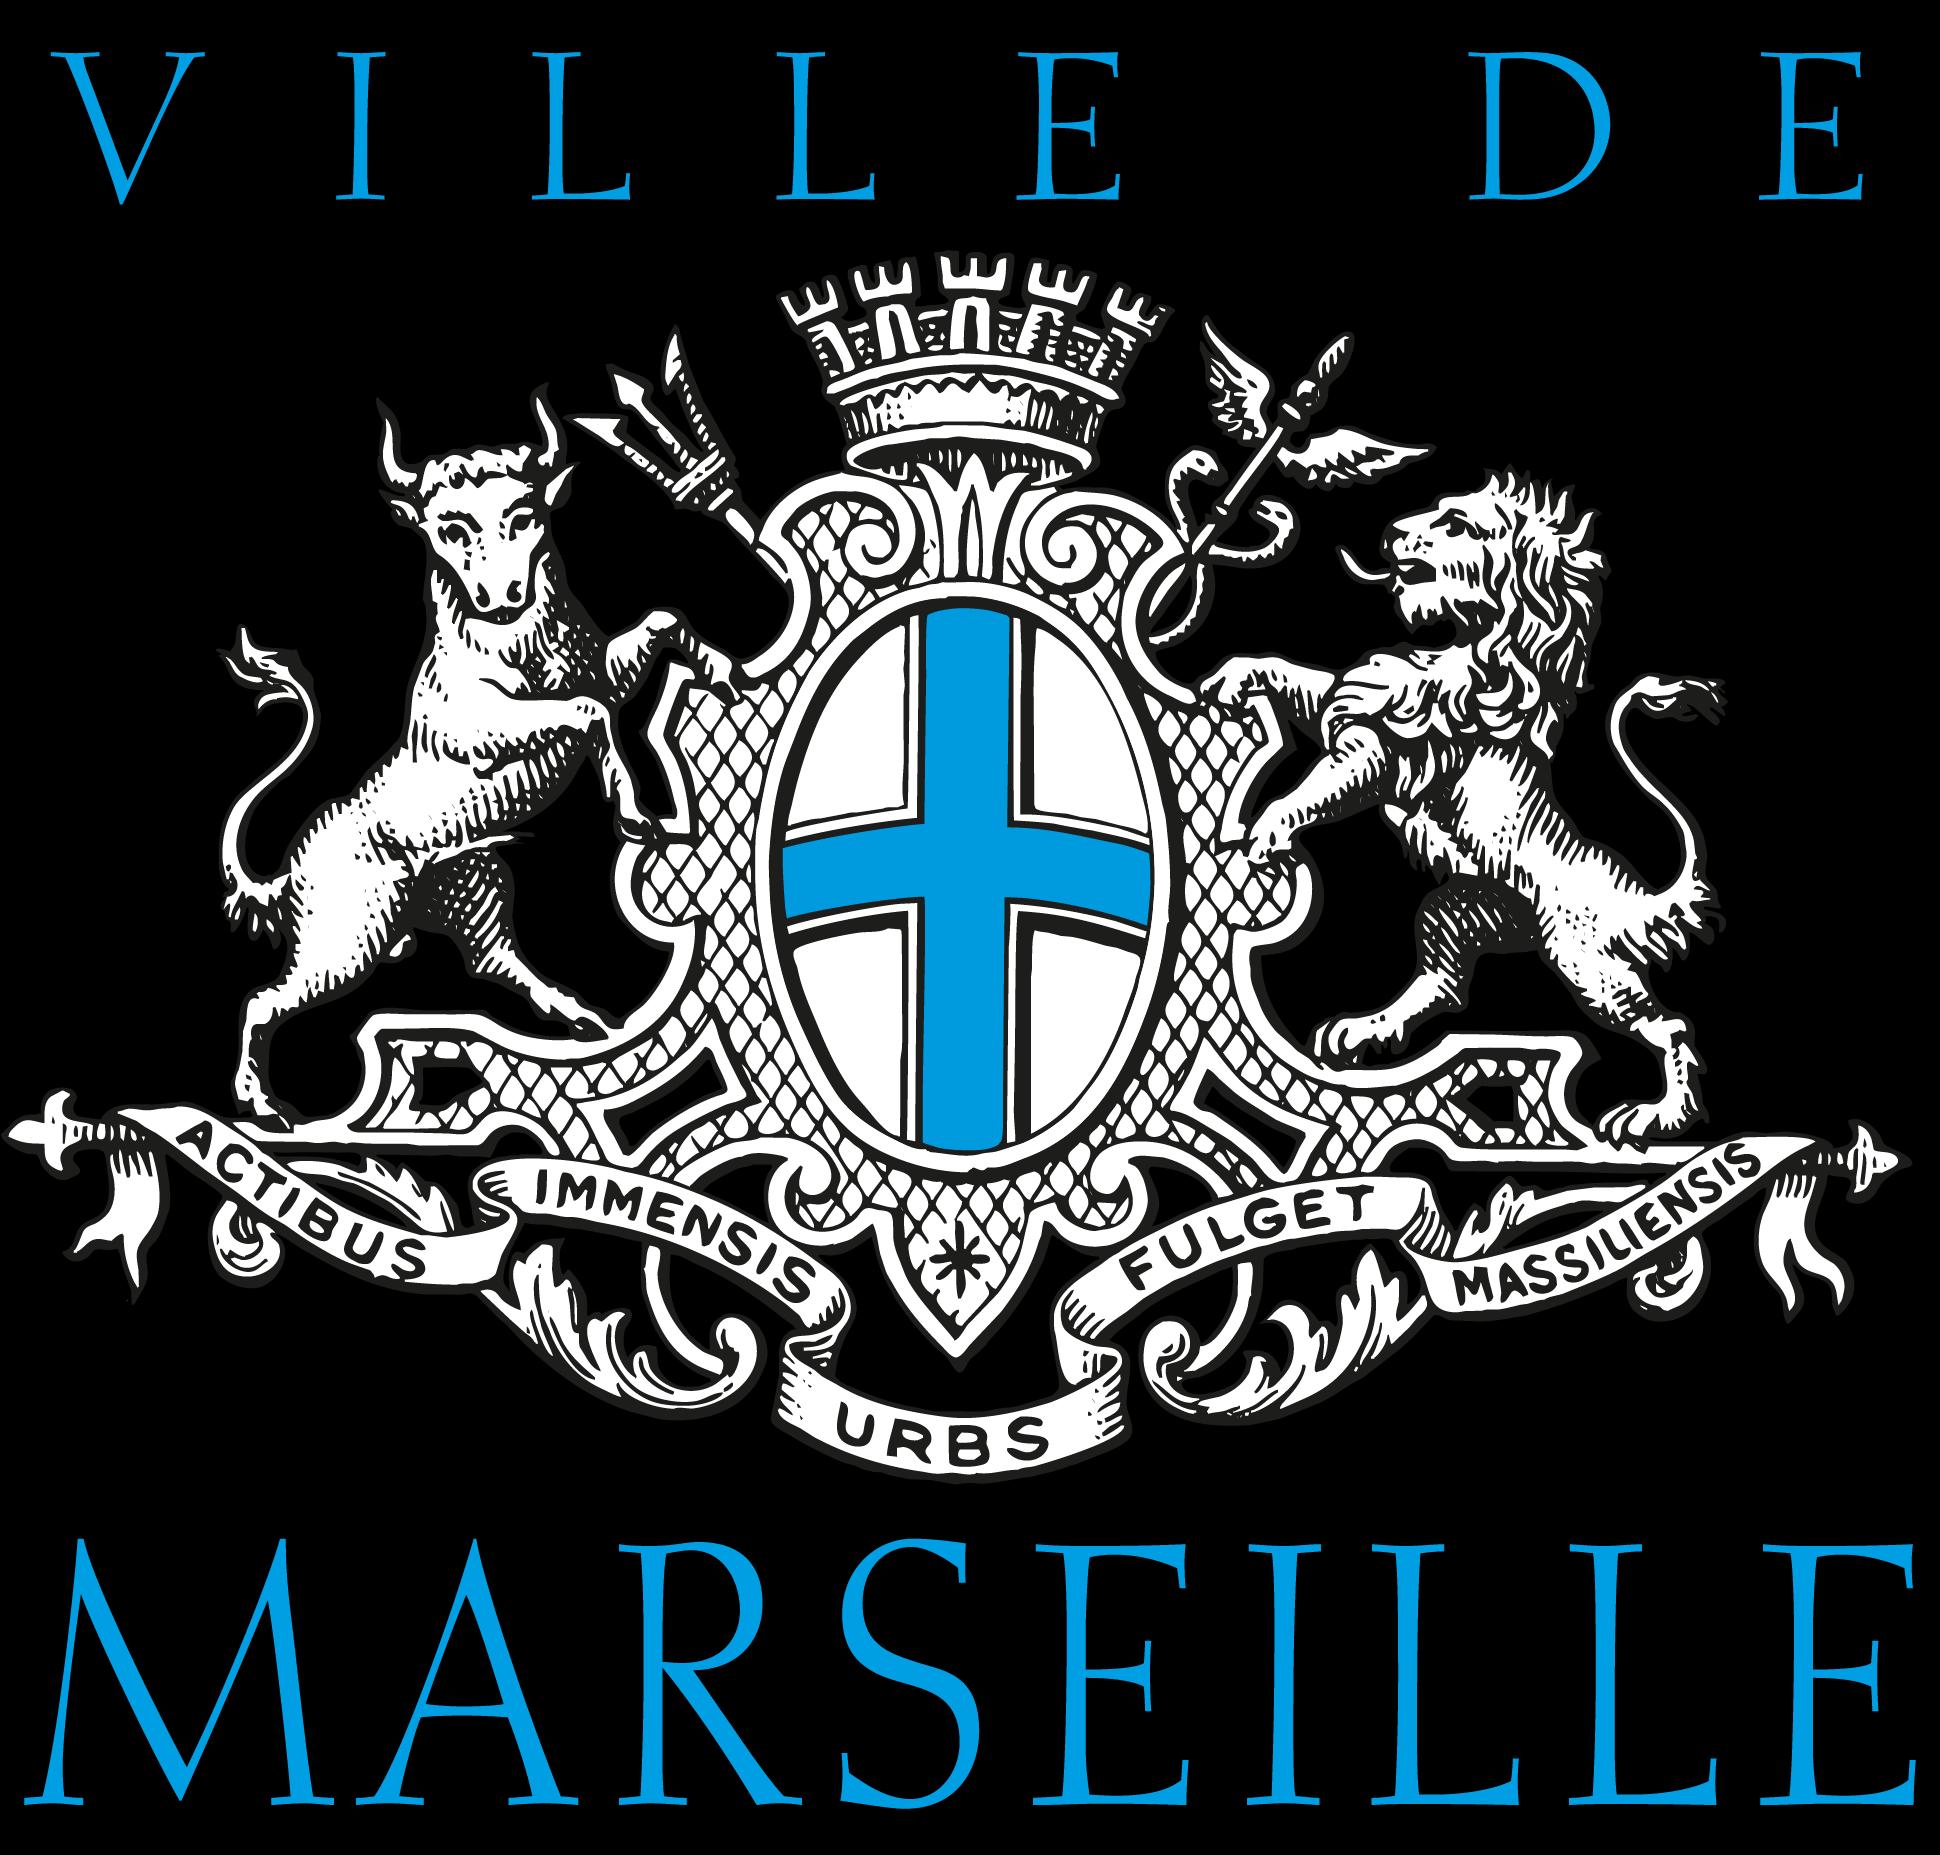 Crèche Federation Marseille